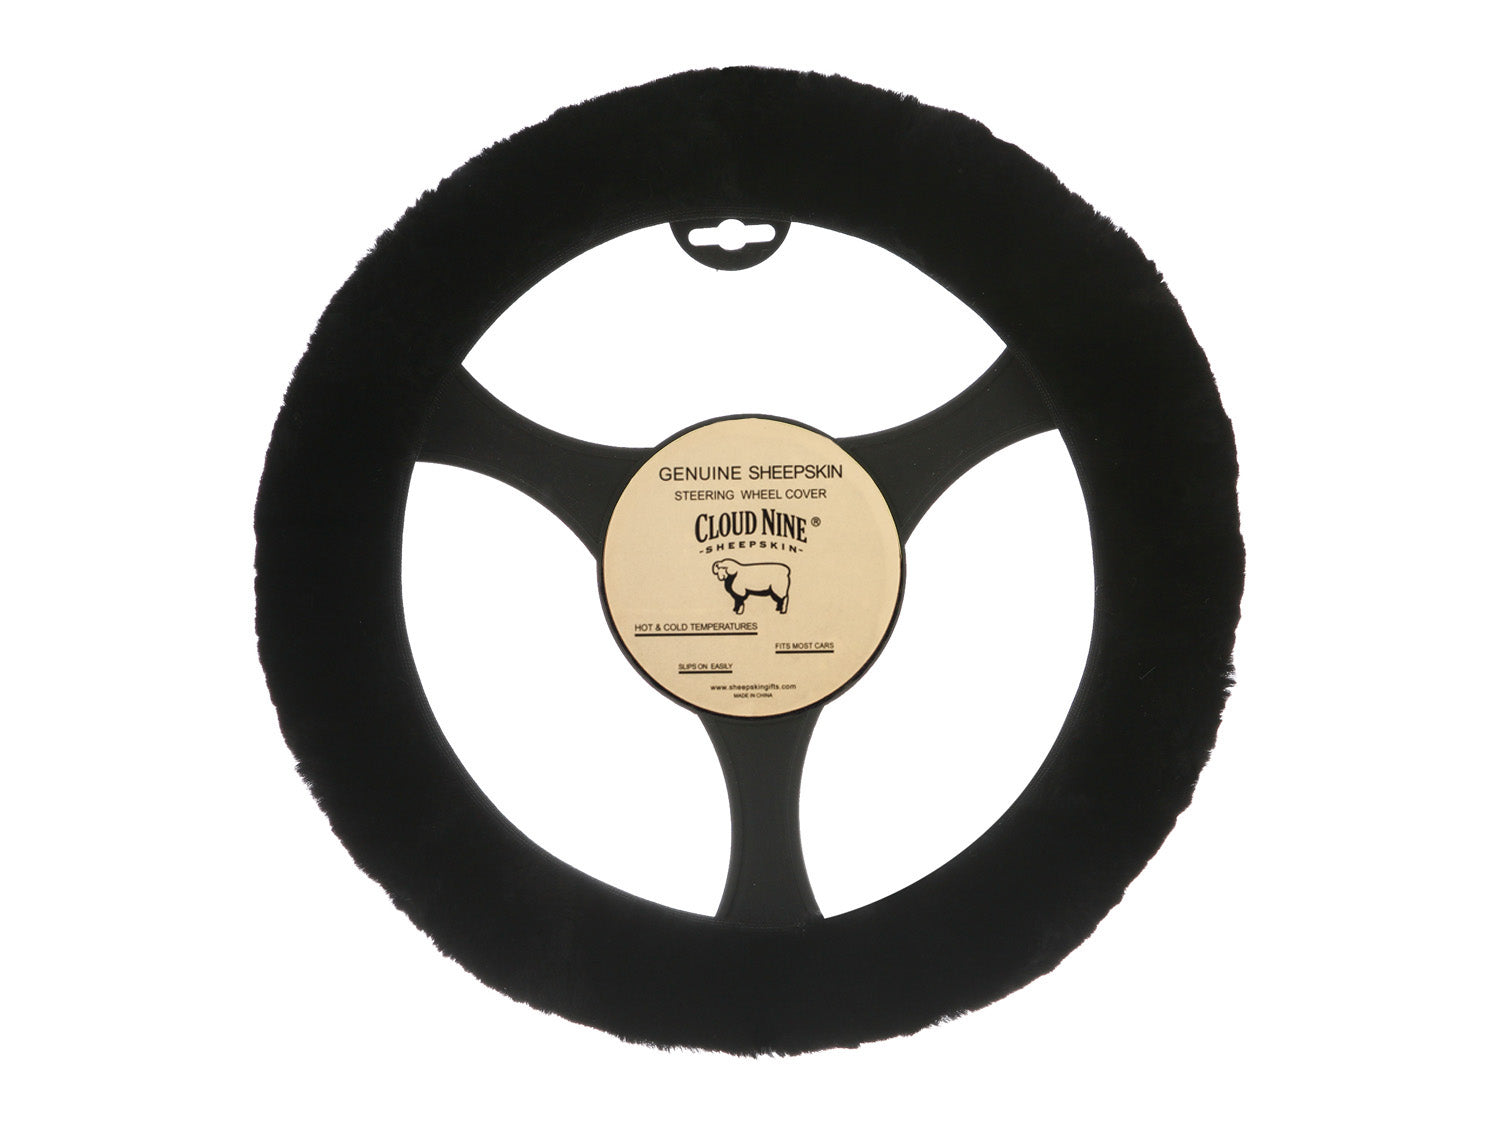 Genuine Sheepskin Steering Wheel Cover | Cloud Nine Sheepskin